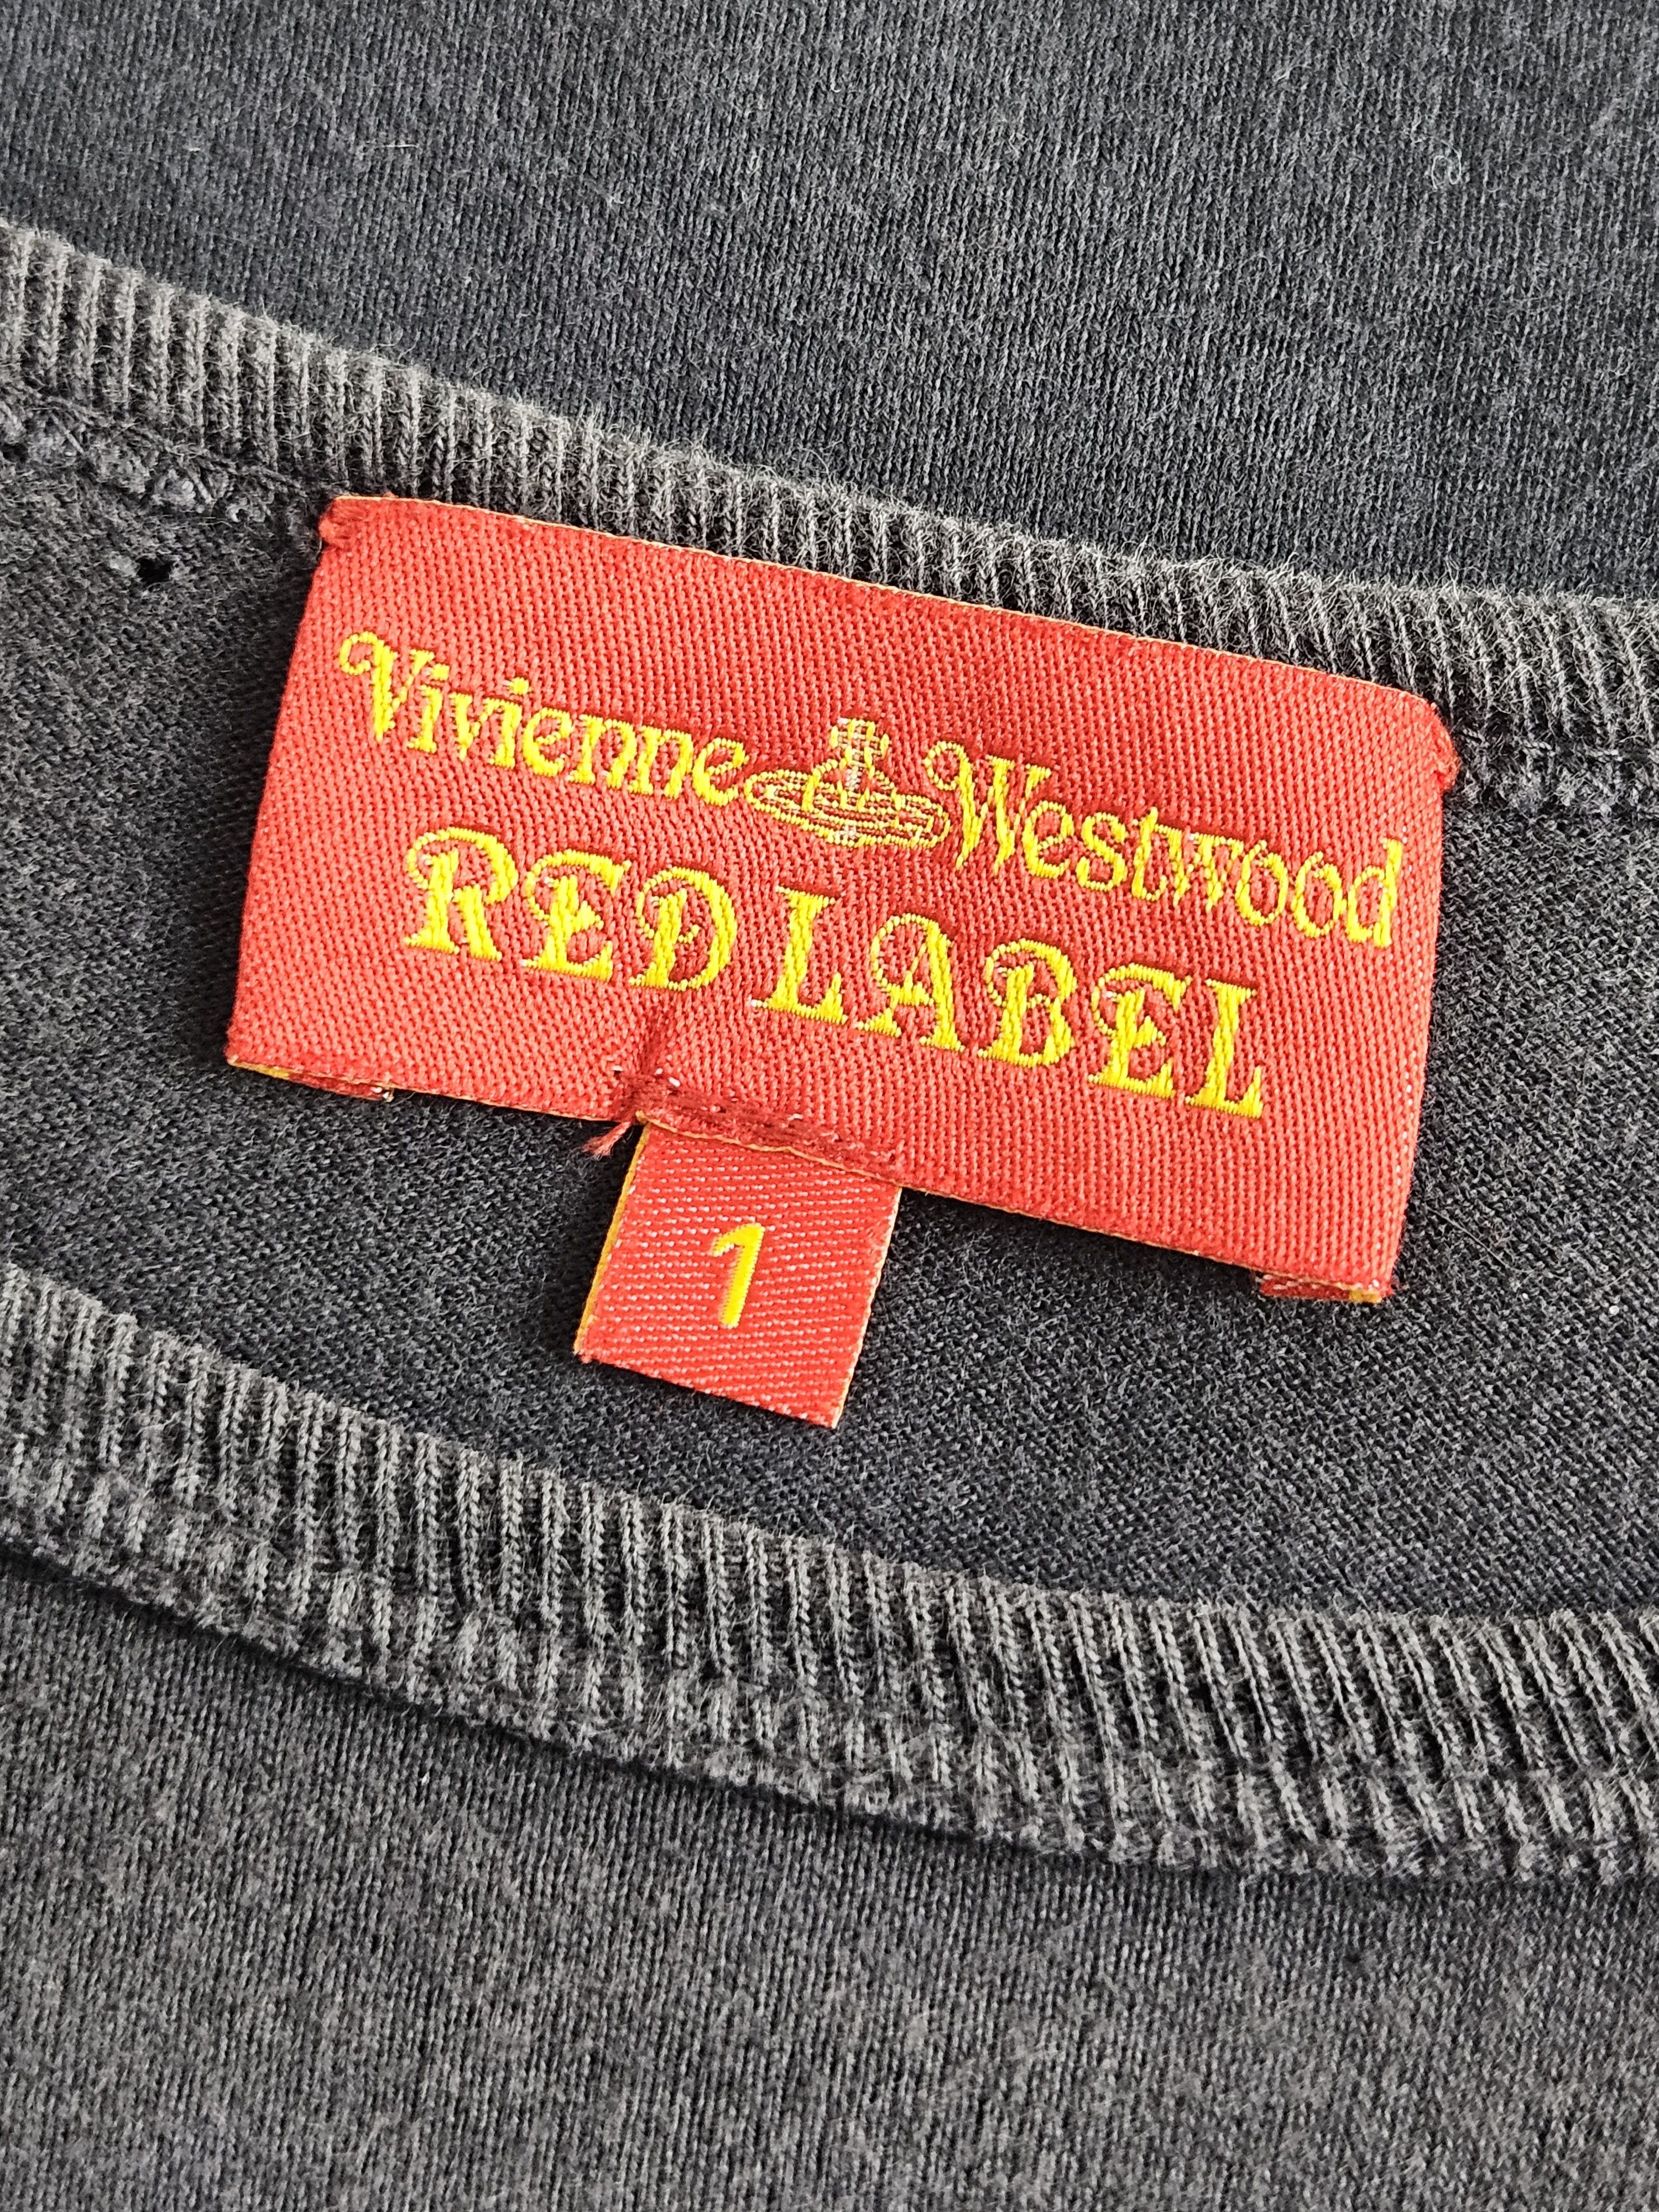 Vivienne Westwood Red Label Orb Shirt - 4